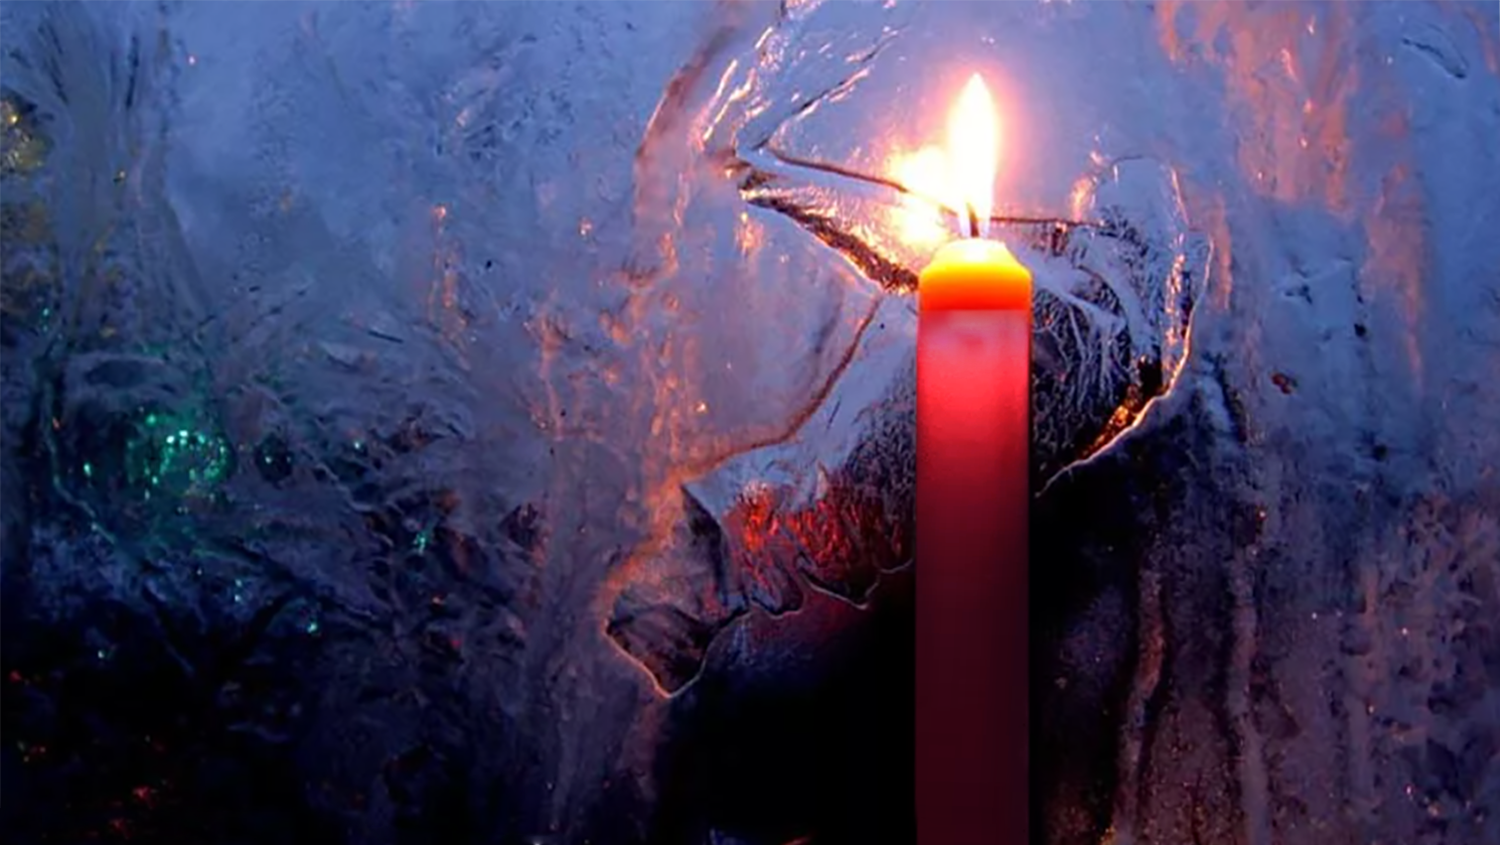 Горит красивая свеча. Горящая свеча. Горящие свечи. Красивые горящие свечи. Огонь свечи.